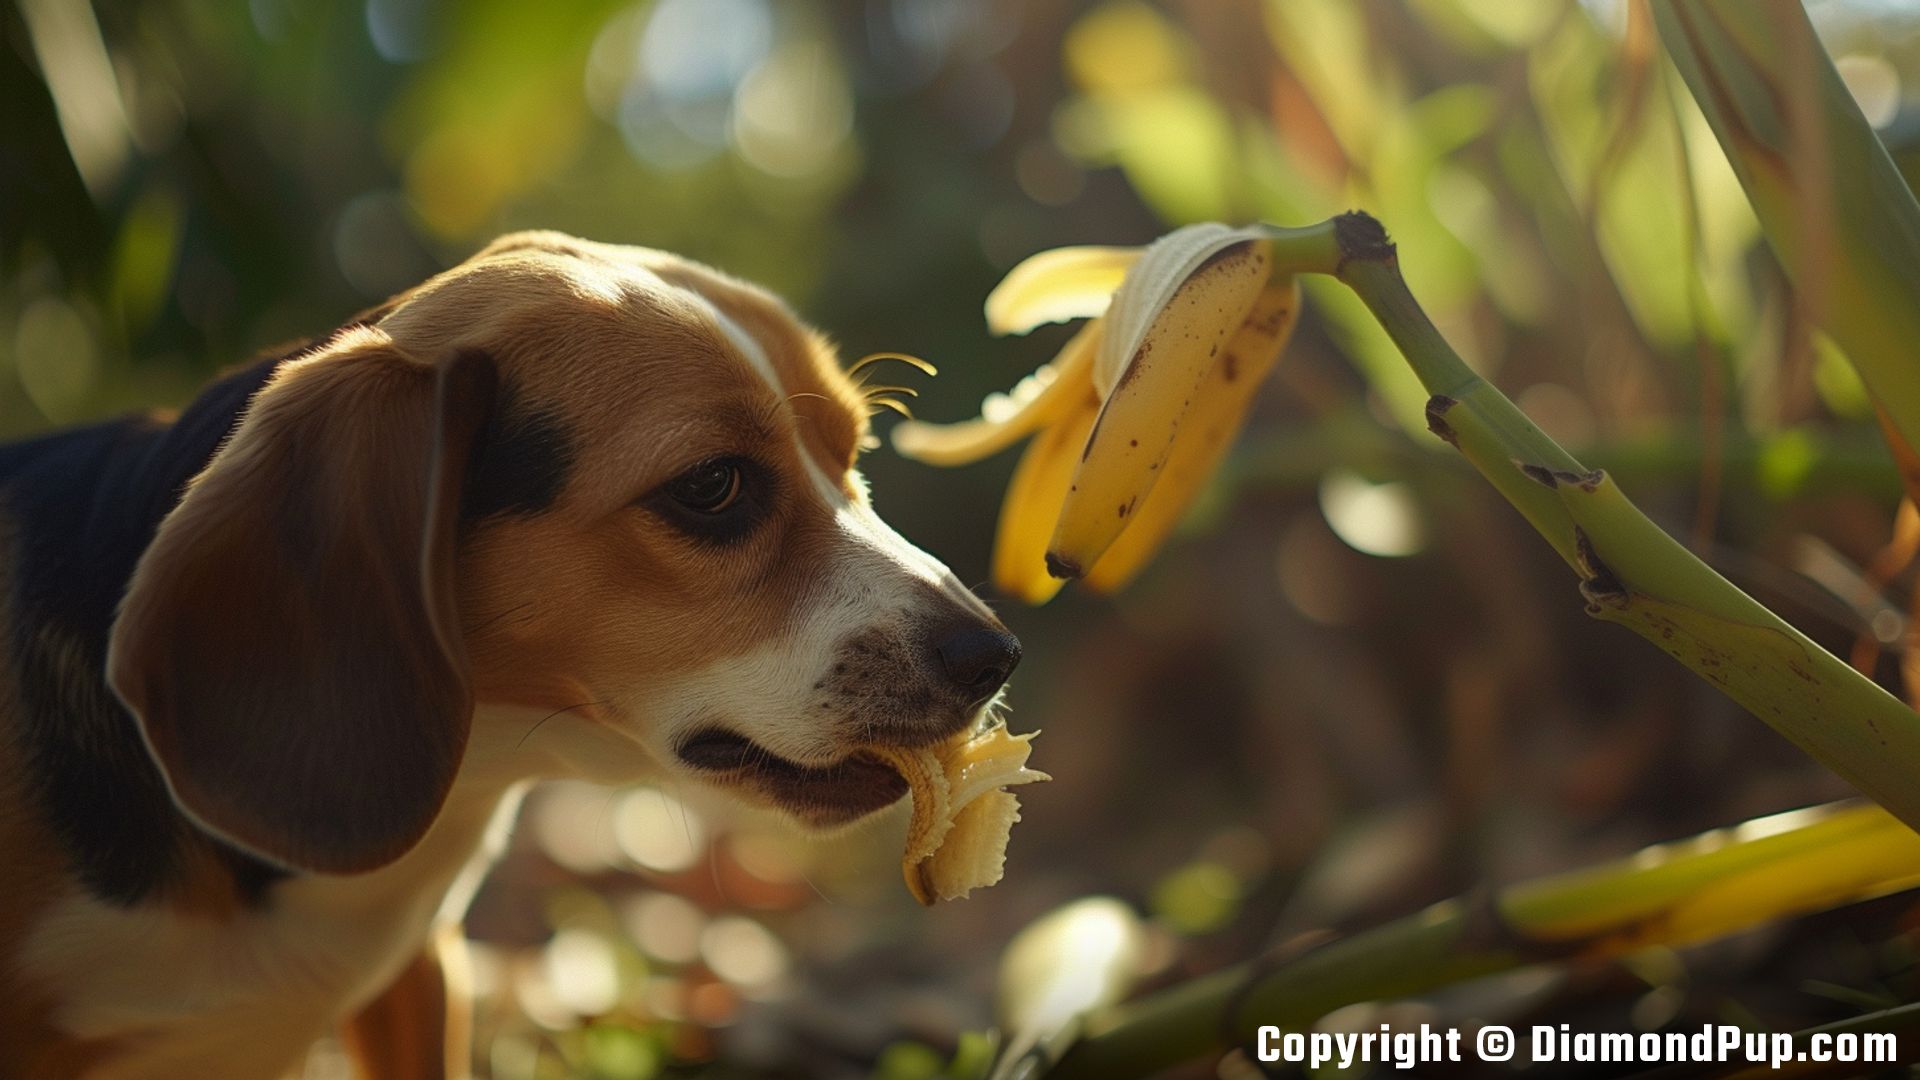 Image of a Playful Beagle Snacking on Banana